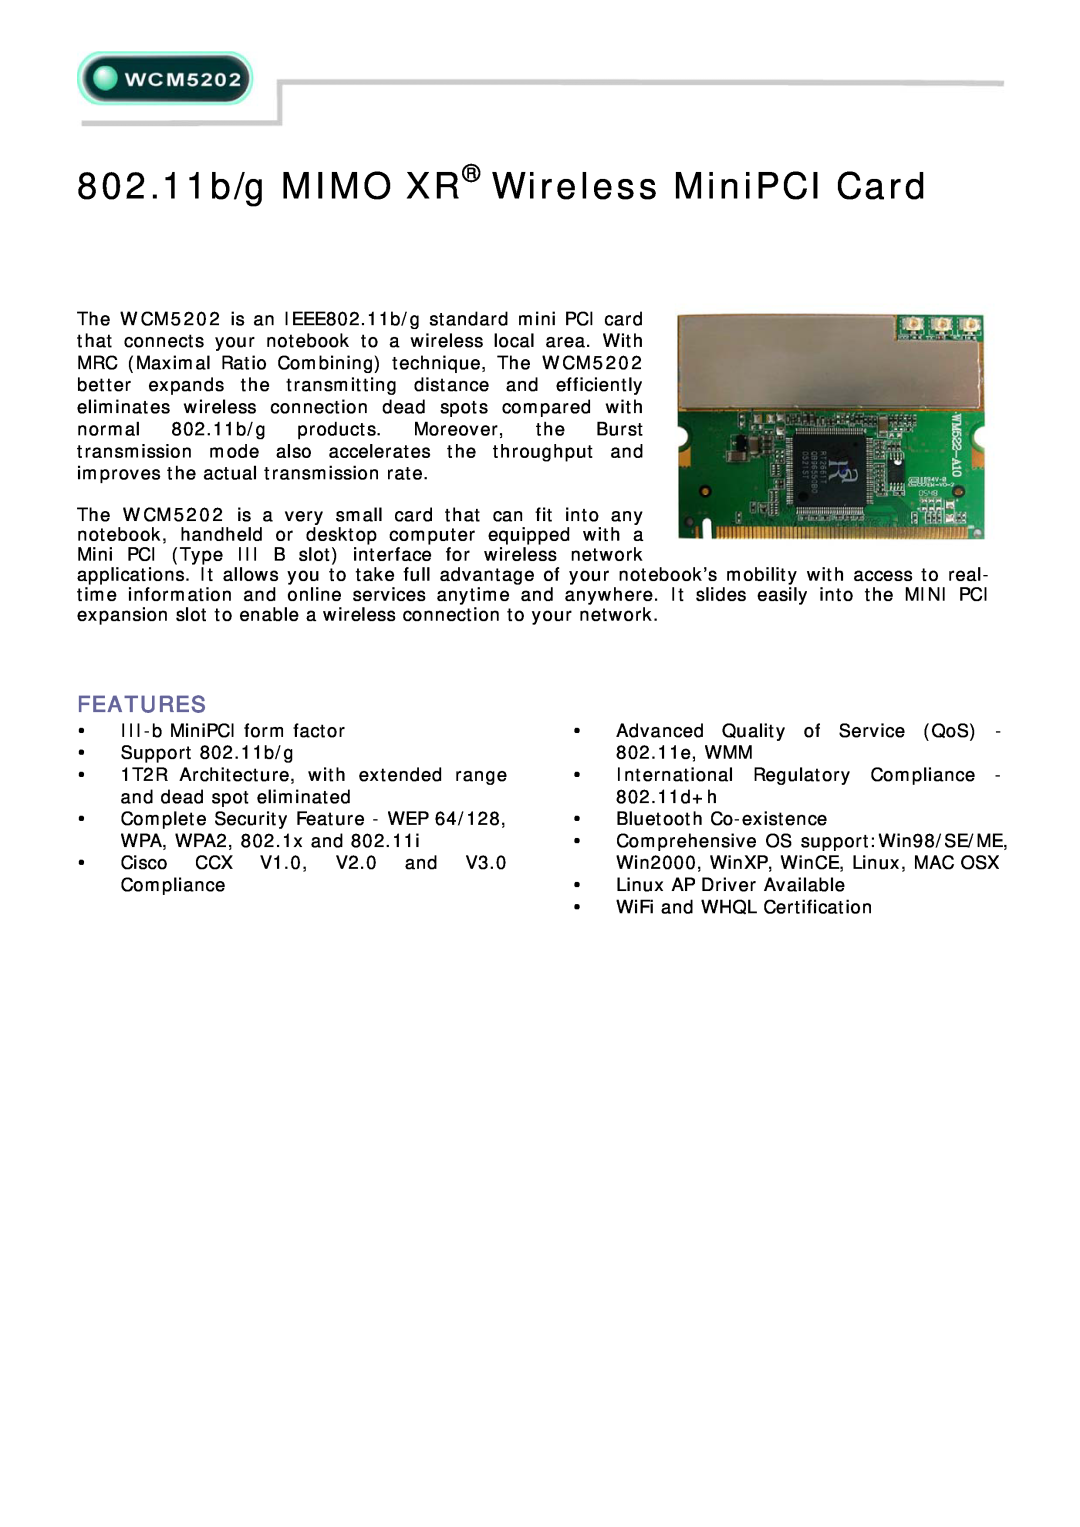 Abocom WCM5202 manual Features, 802.11b/g MIMO XR Wireless MiniPCI Card 